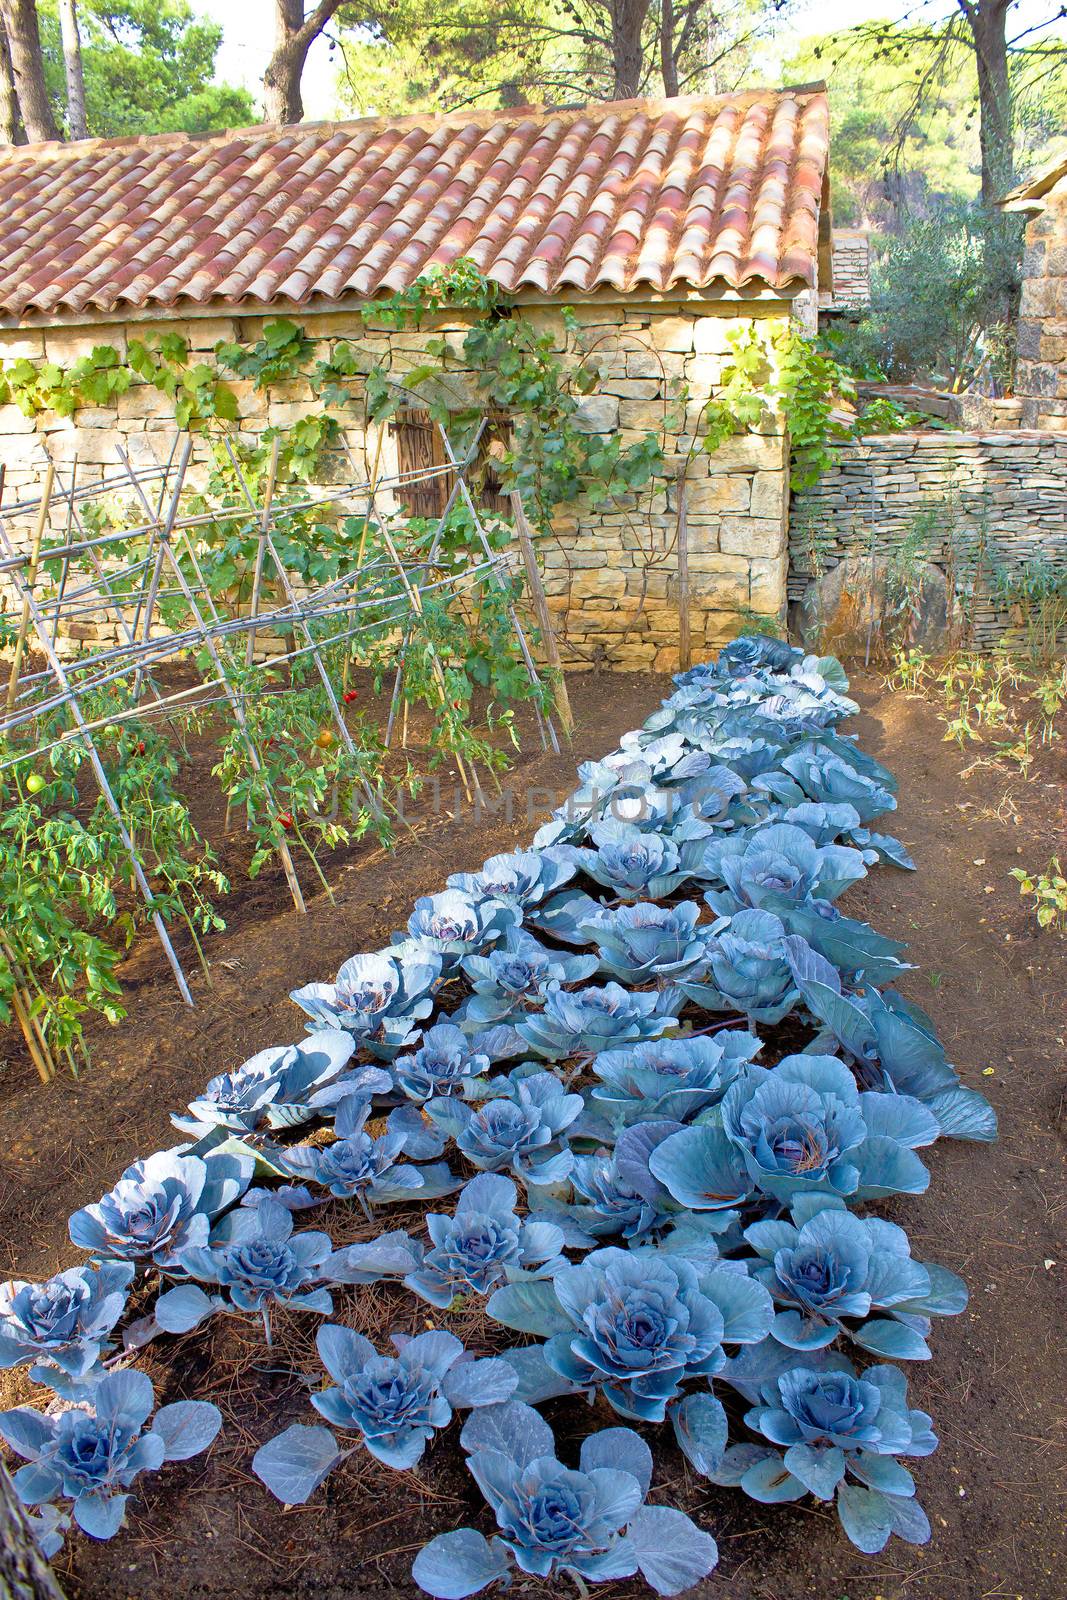 Cabbage vegetable in backyard garden of mediterranean village in Croatia